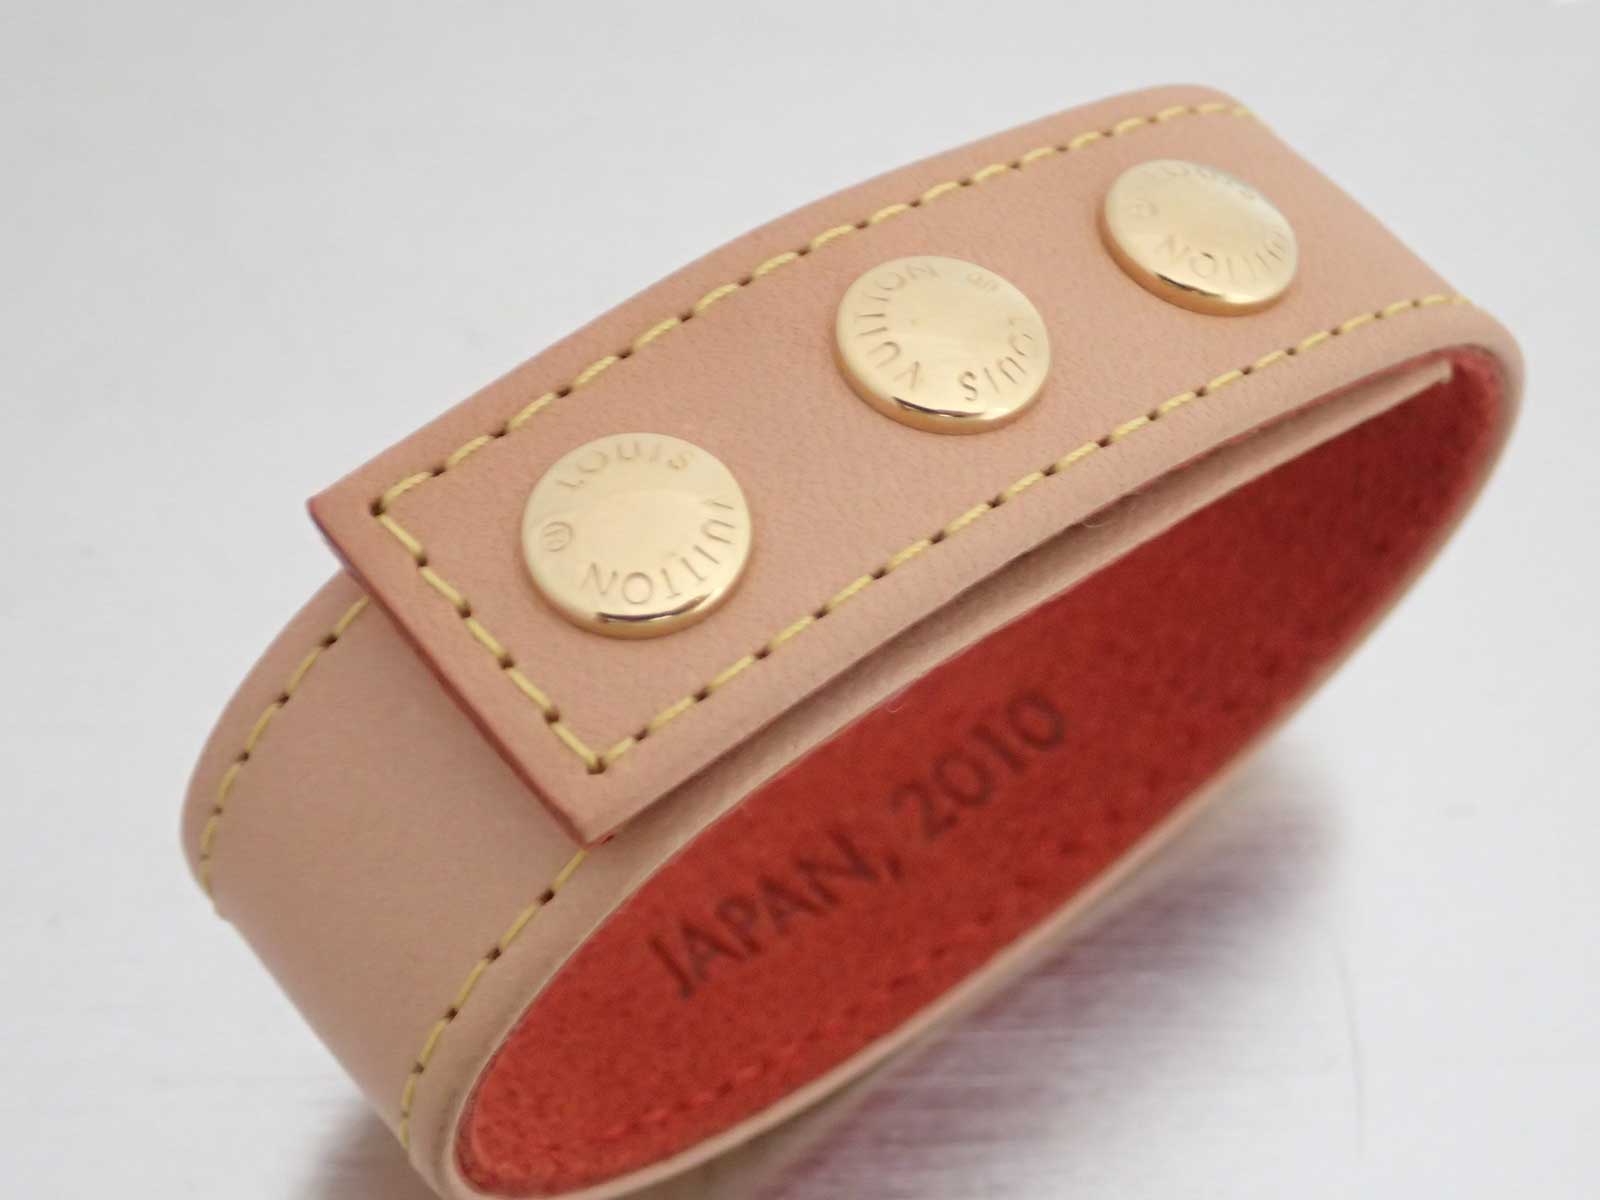 Auth Louis Vuitton Novelty JAPAN 2010 Bracelet Beige/Goldtone Leather - e41539 | eBay